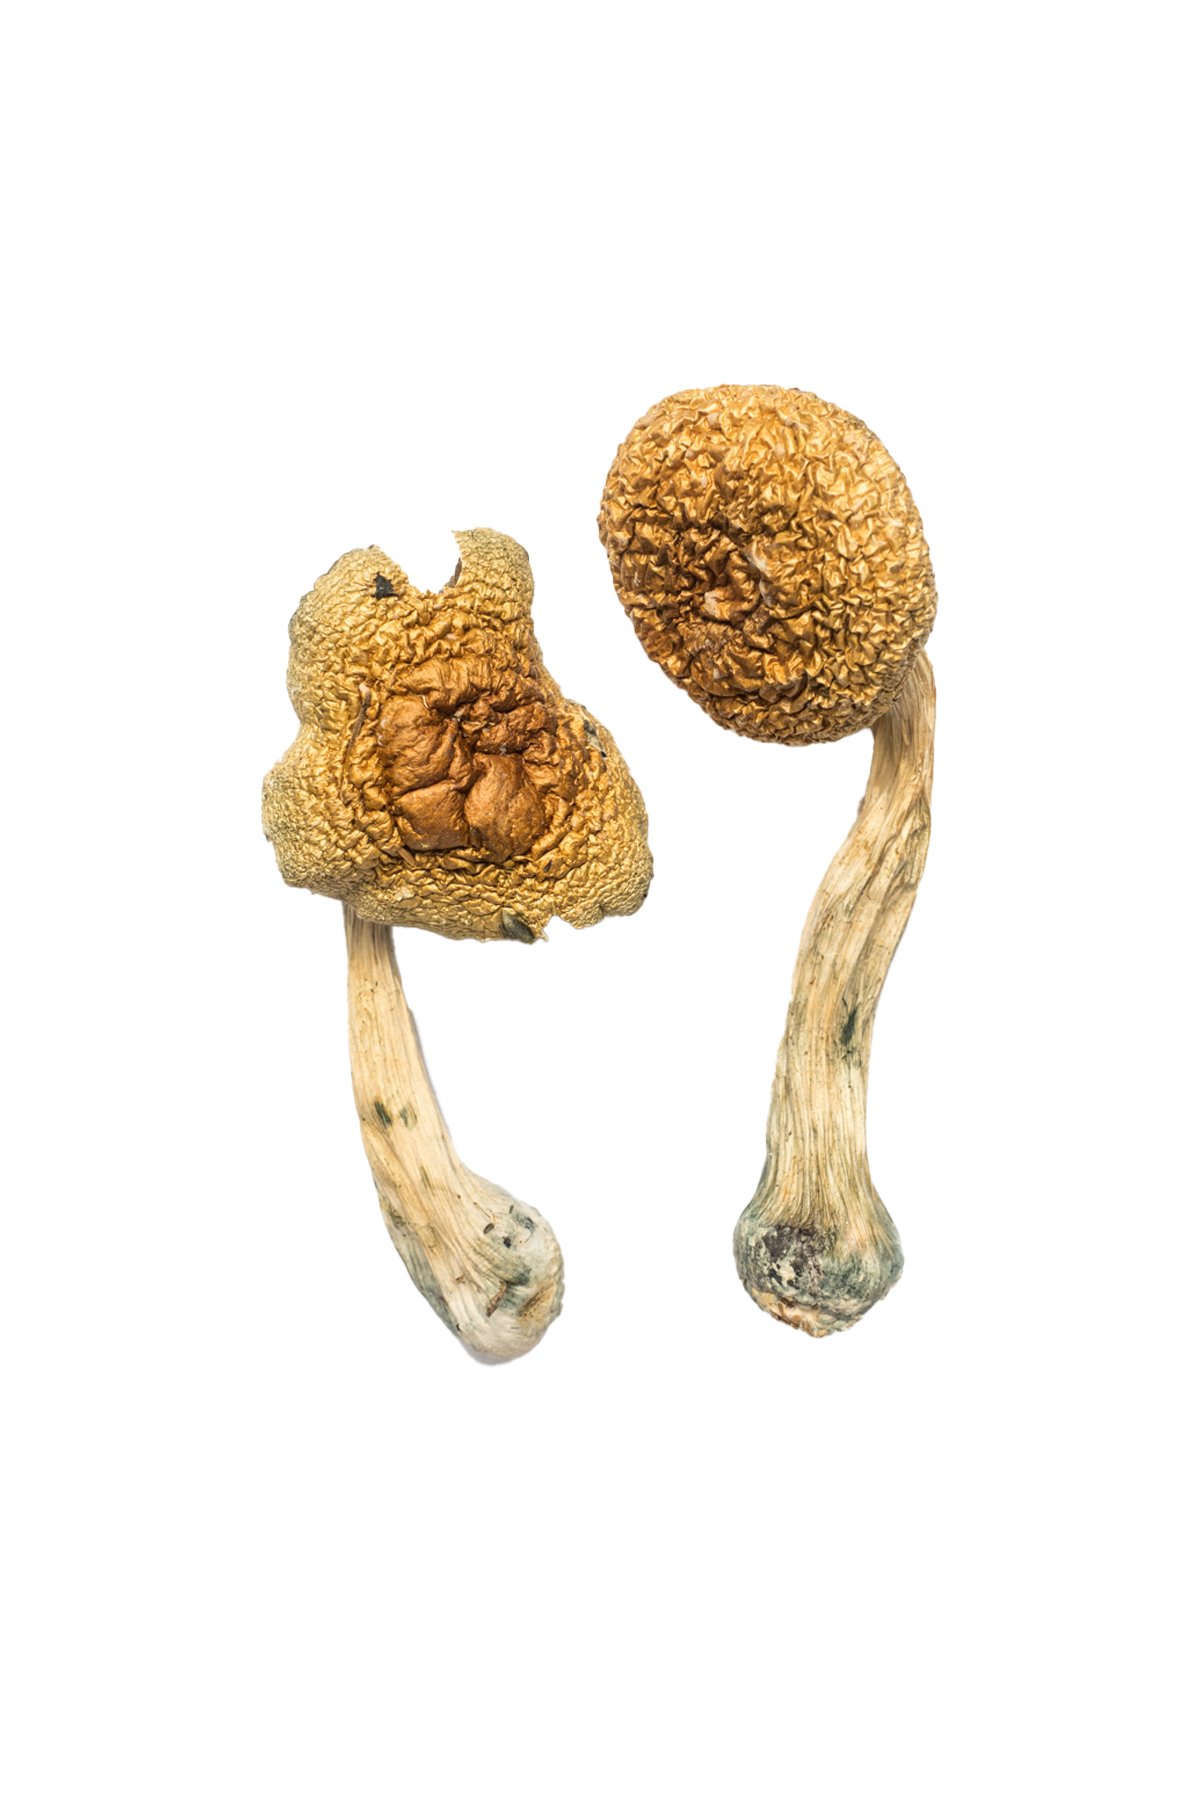 Buy Golden Mammoth magic Mushroom online Canada